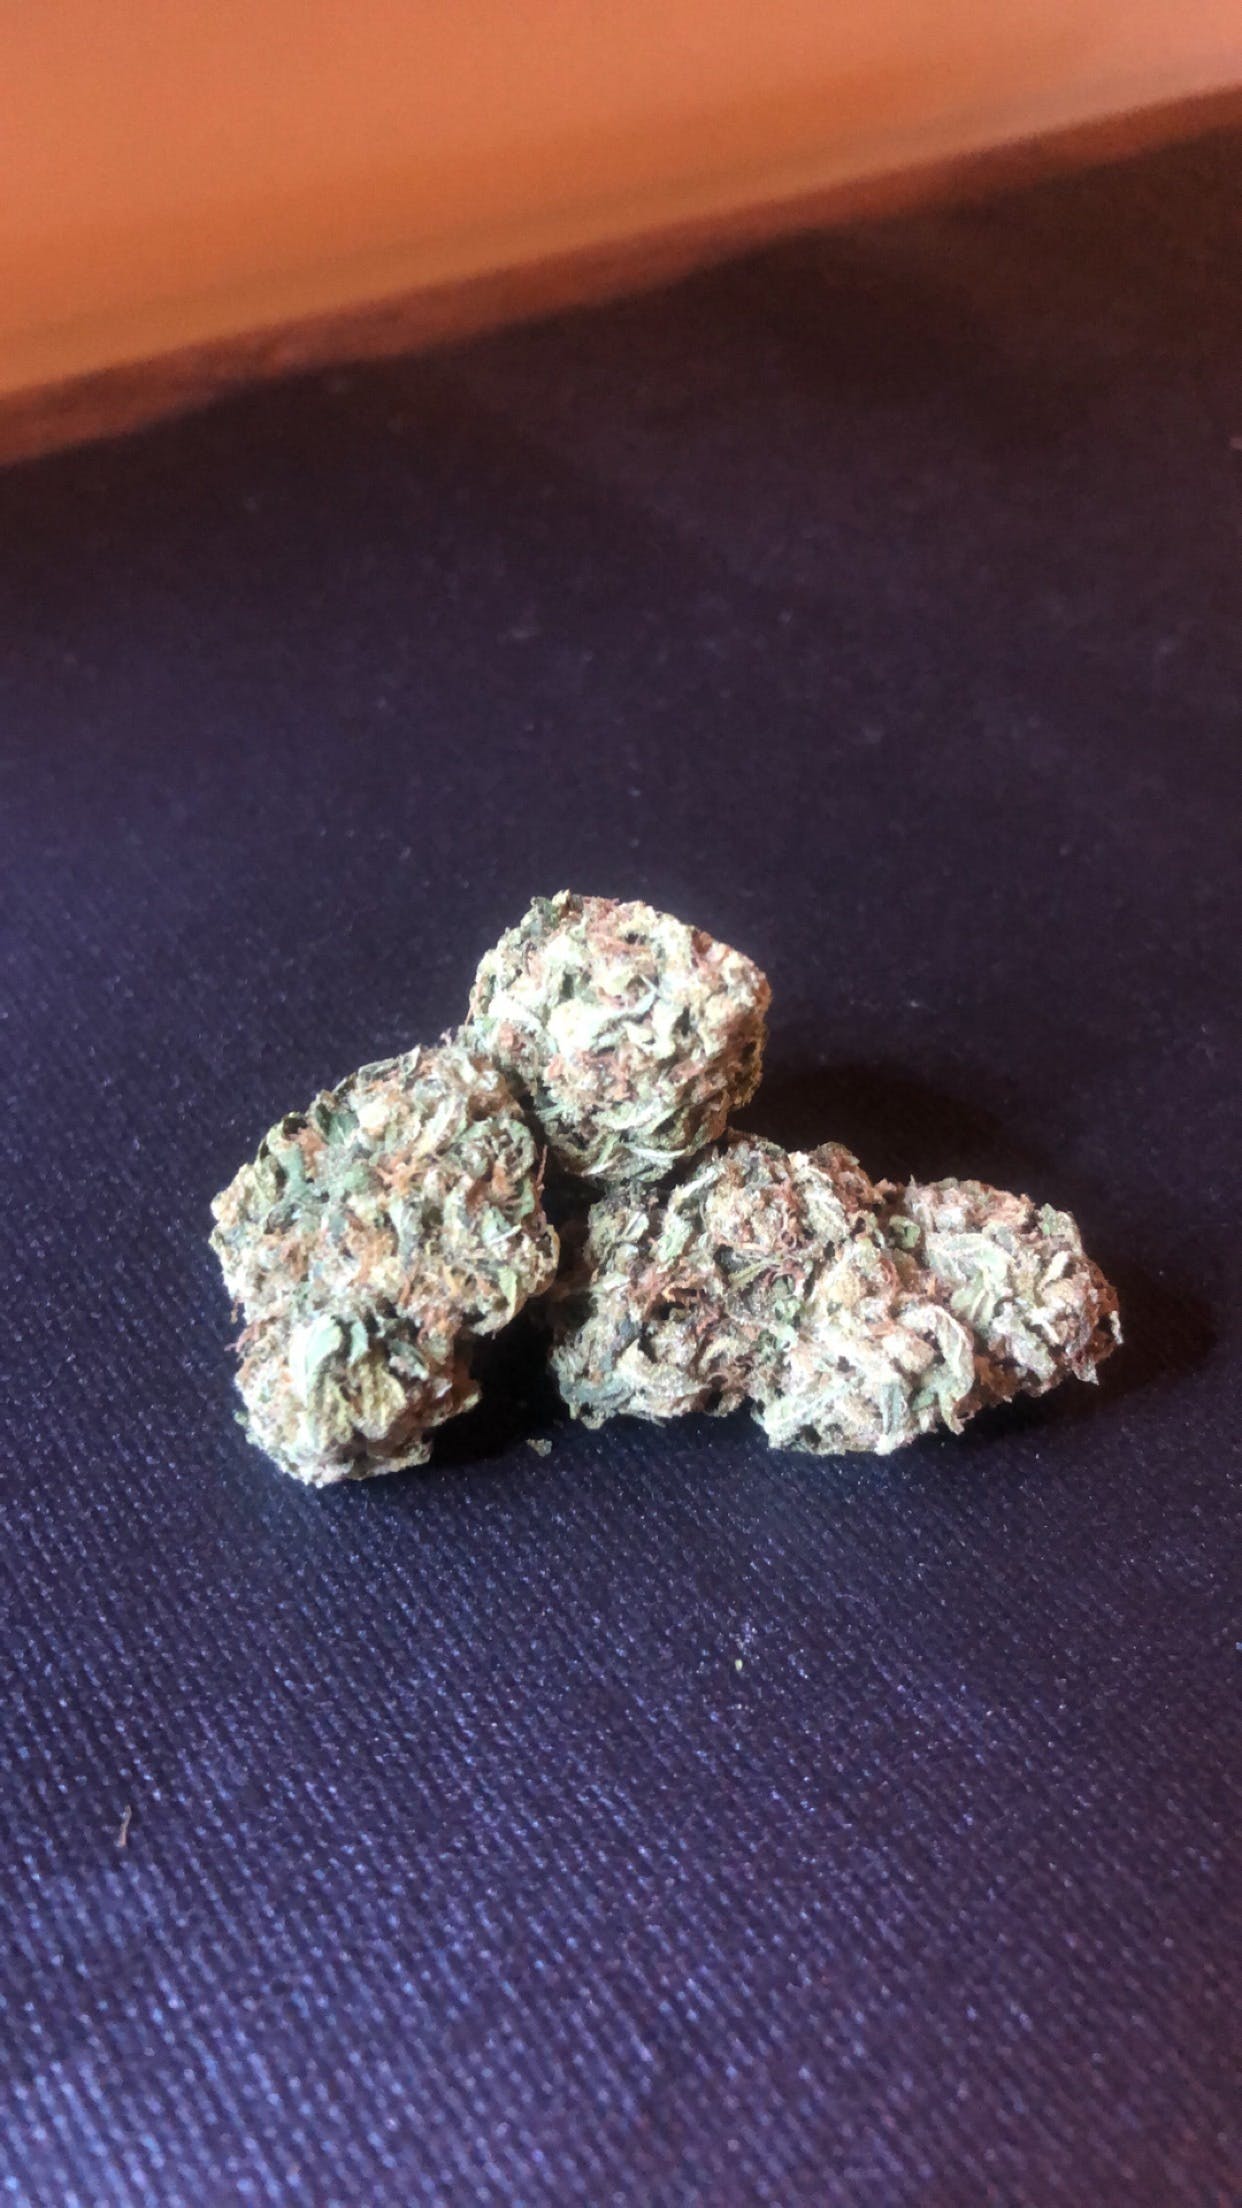 marijuana-dispensaries-3rd-coast-mi-in-ypsilanti-24k